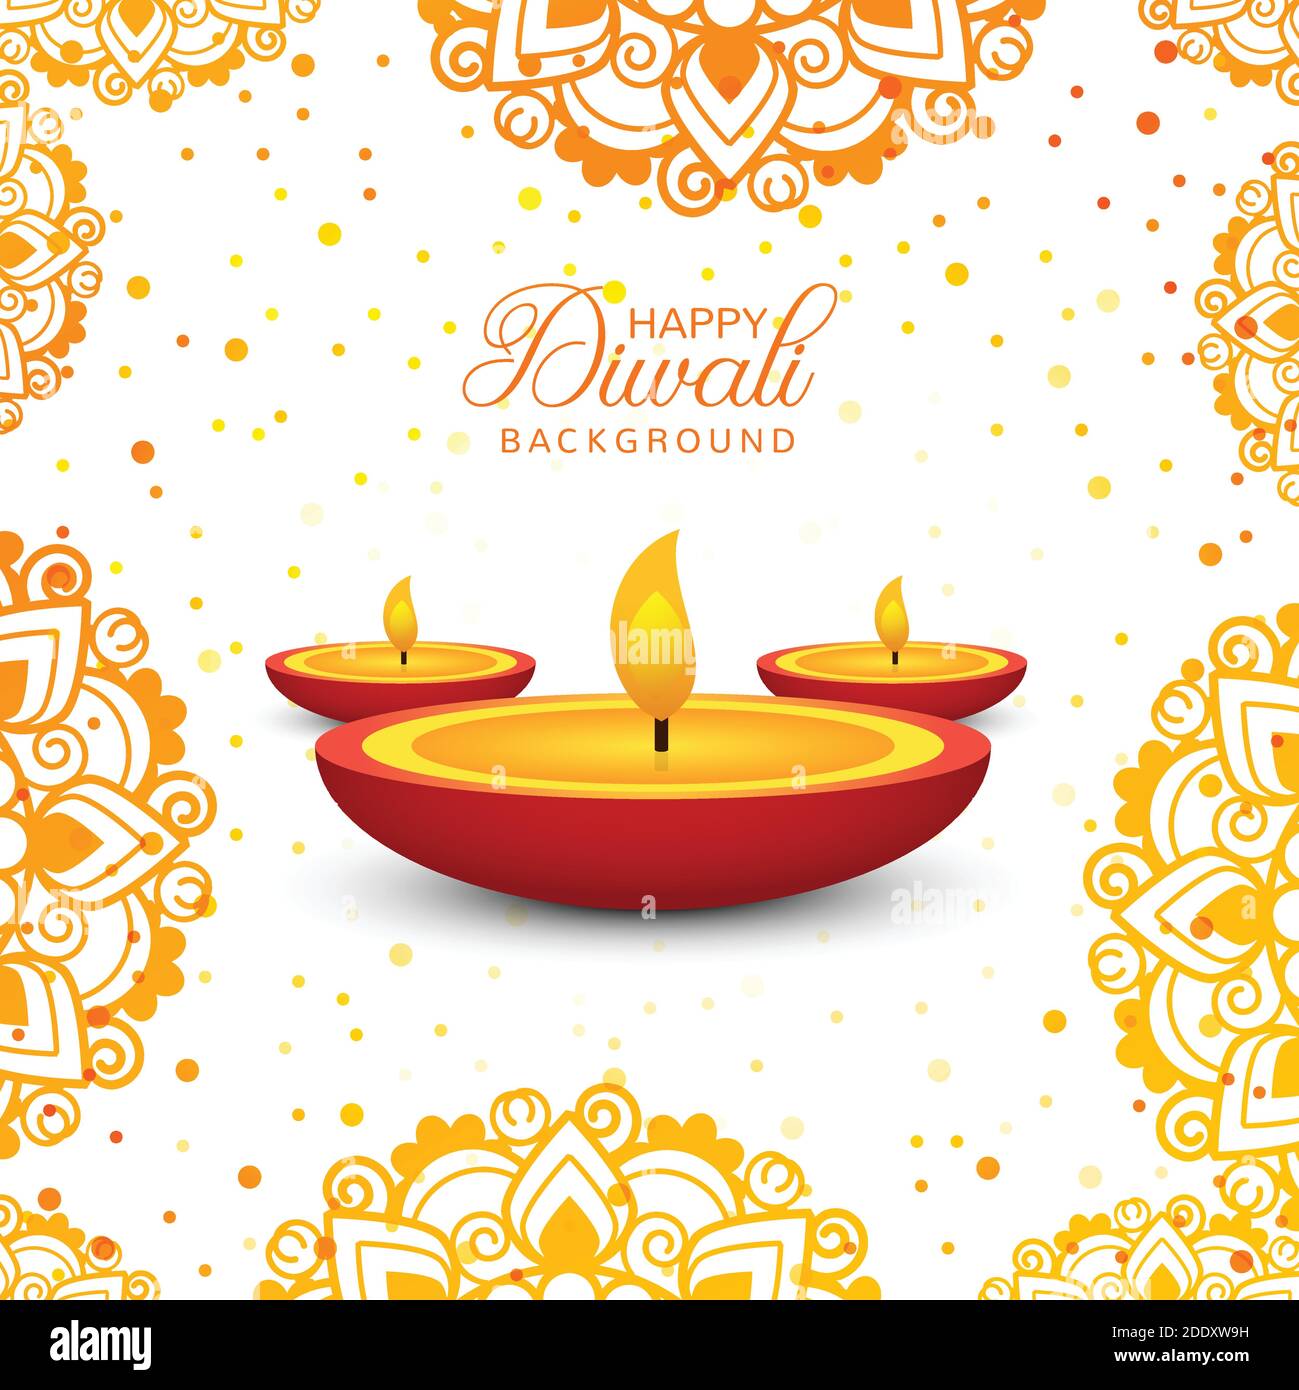 Decorative Happy Diwali background vector Stock Vector Image & Art - Alamy